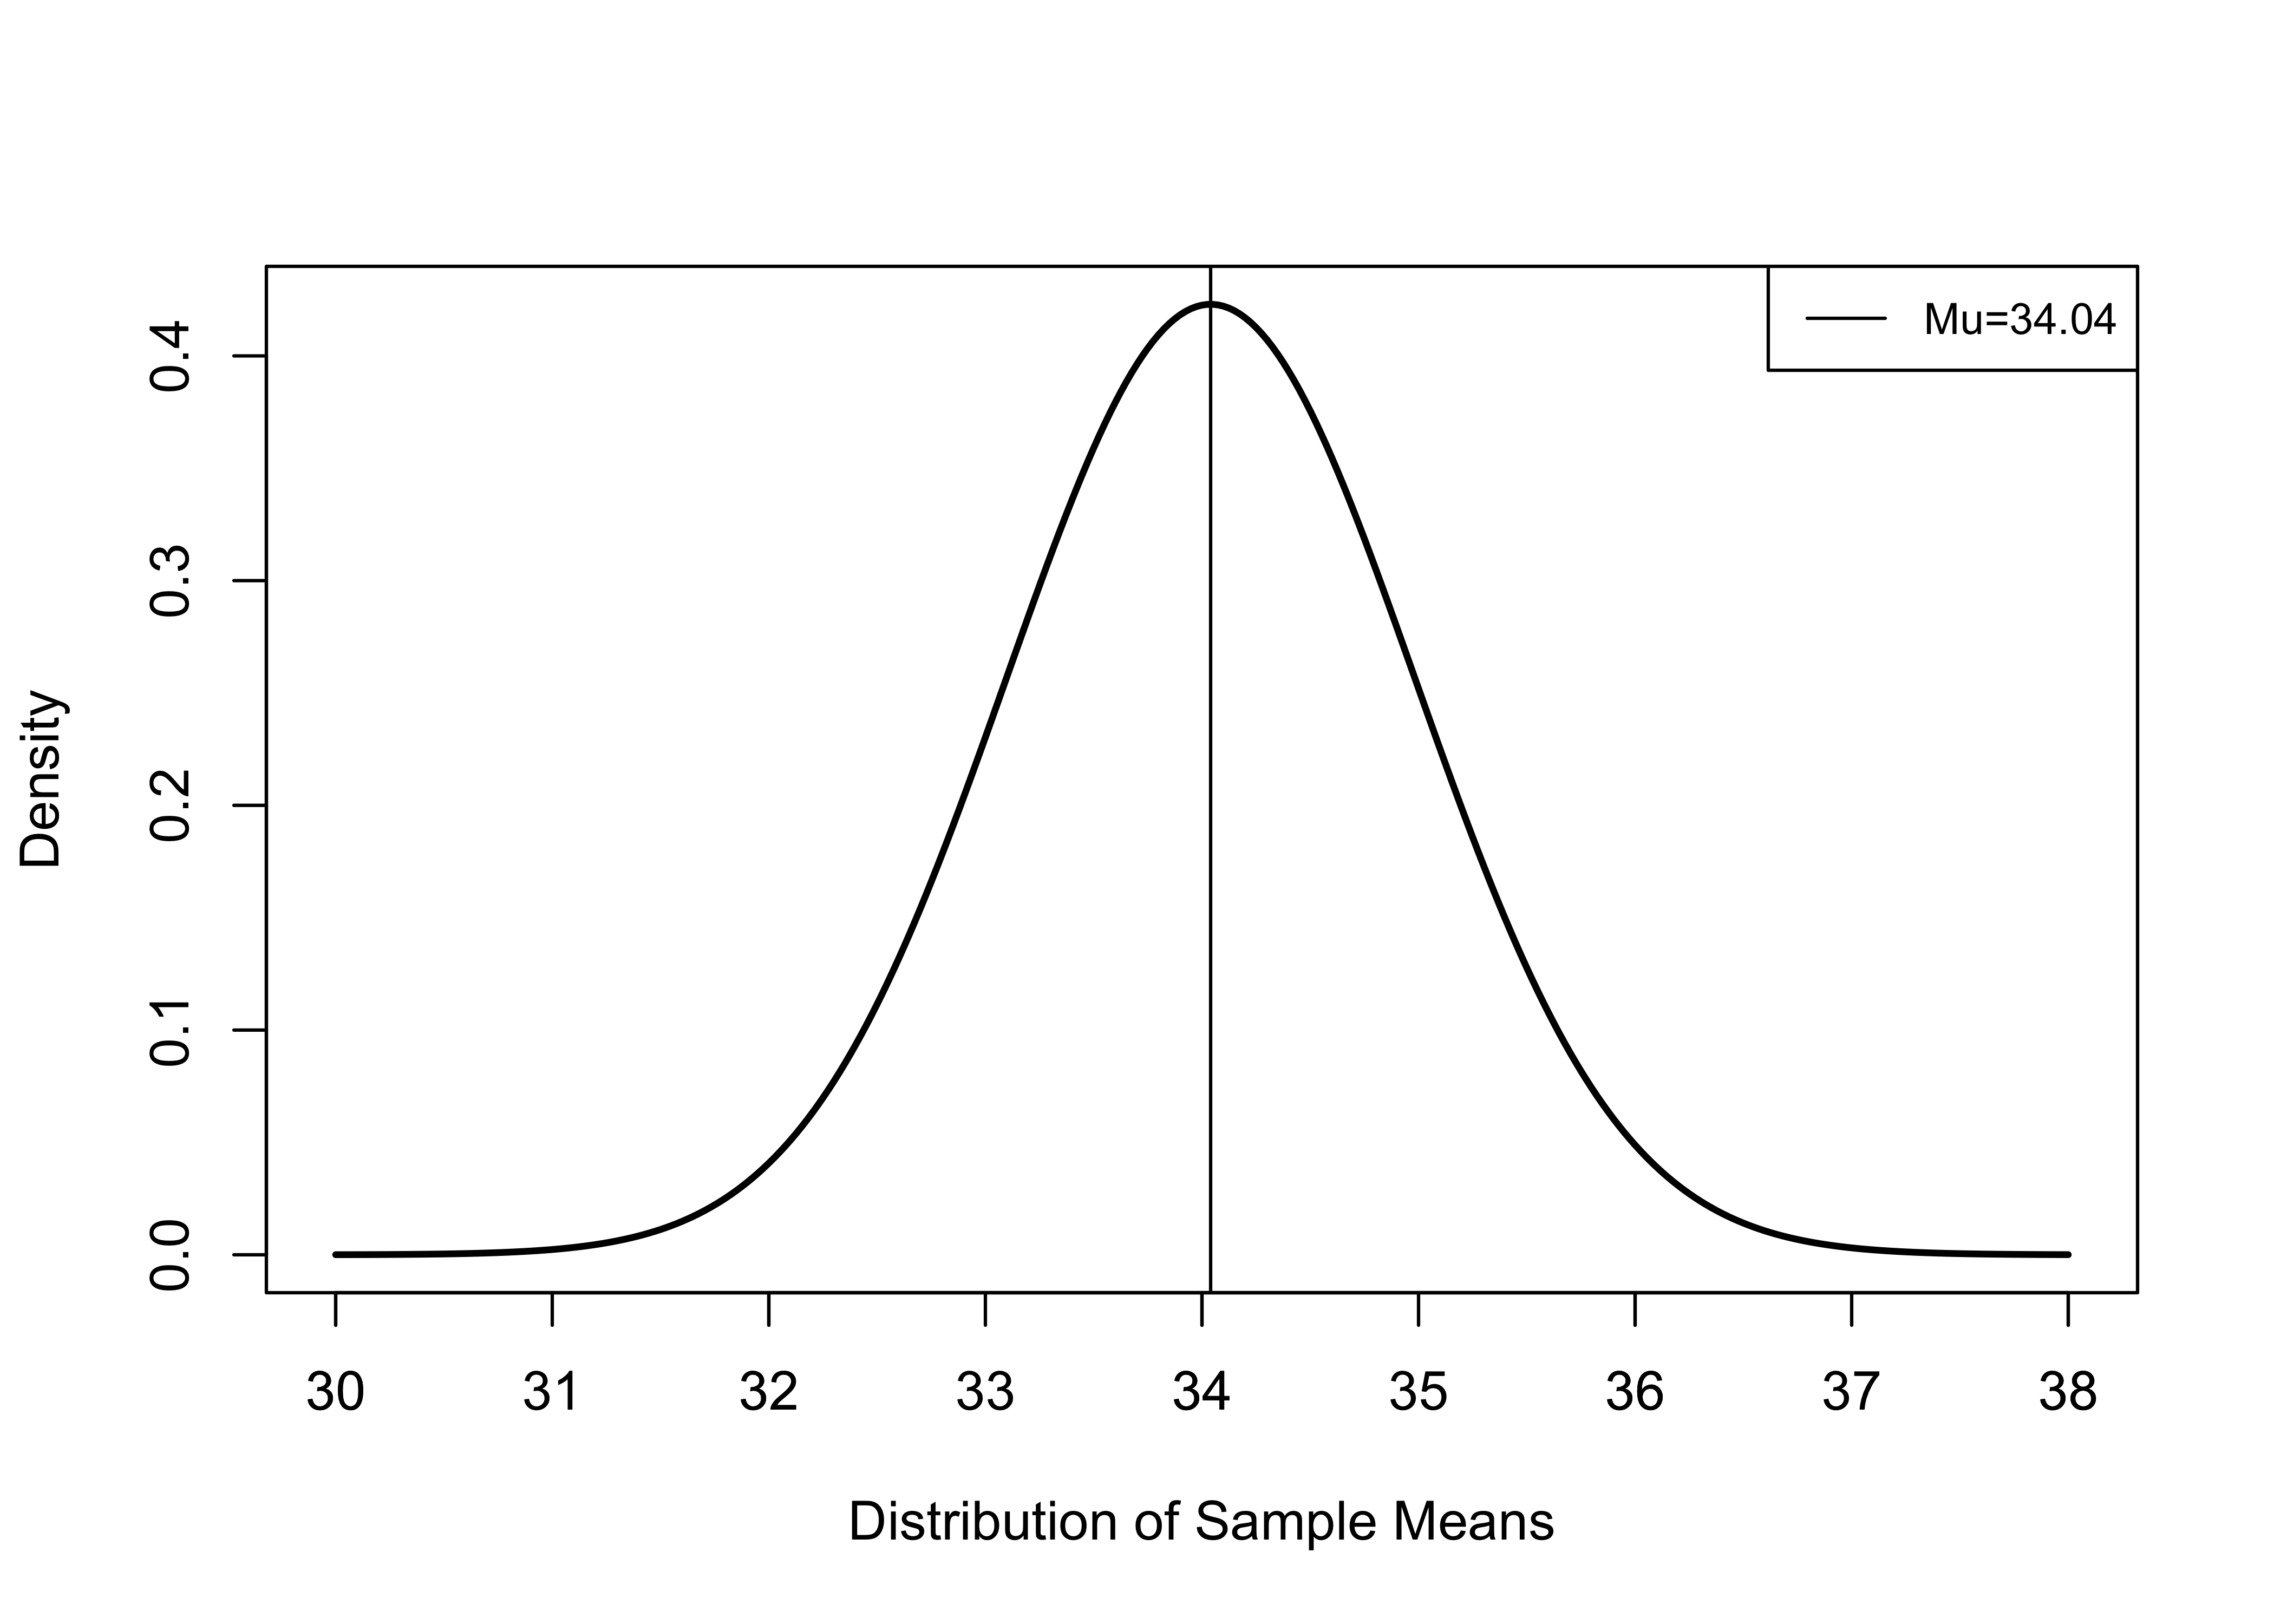 A Theoretical Sampling Distribution, mu=34.04, Sample Size=300